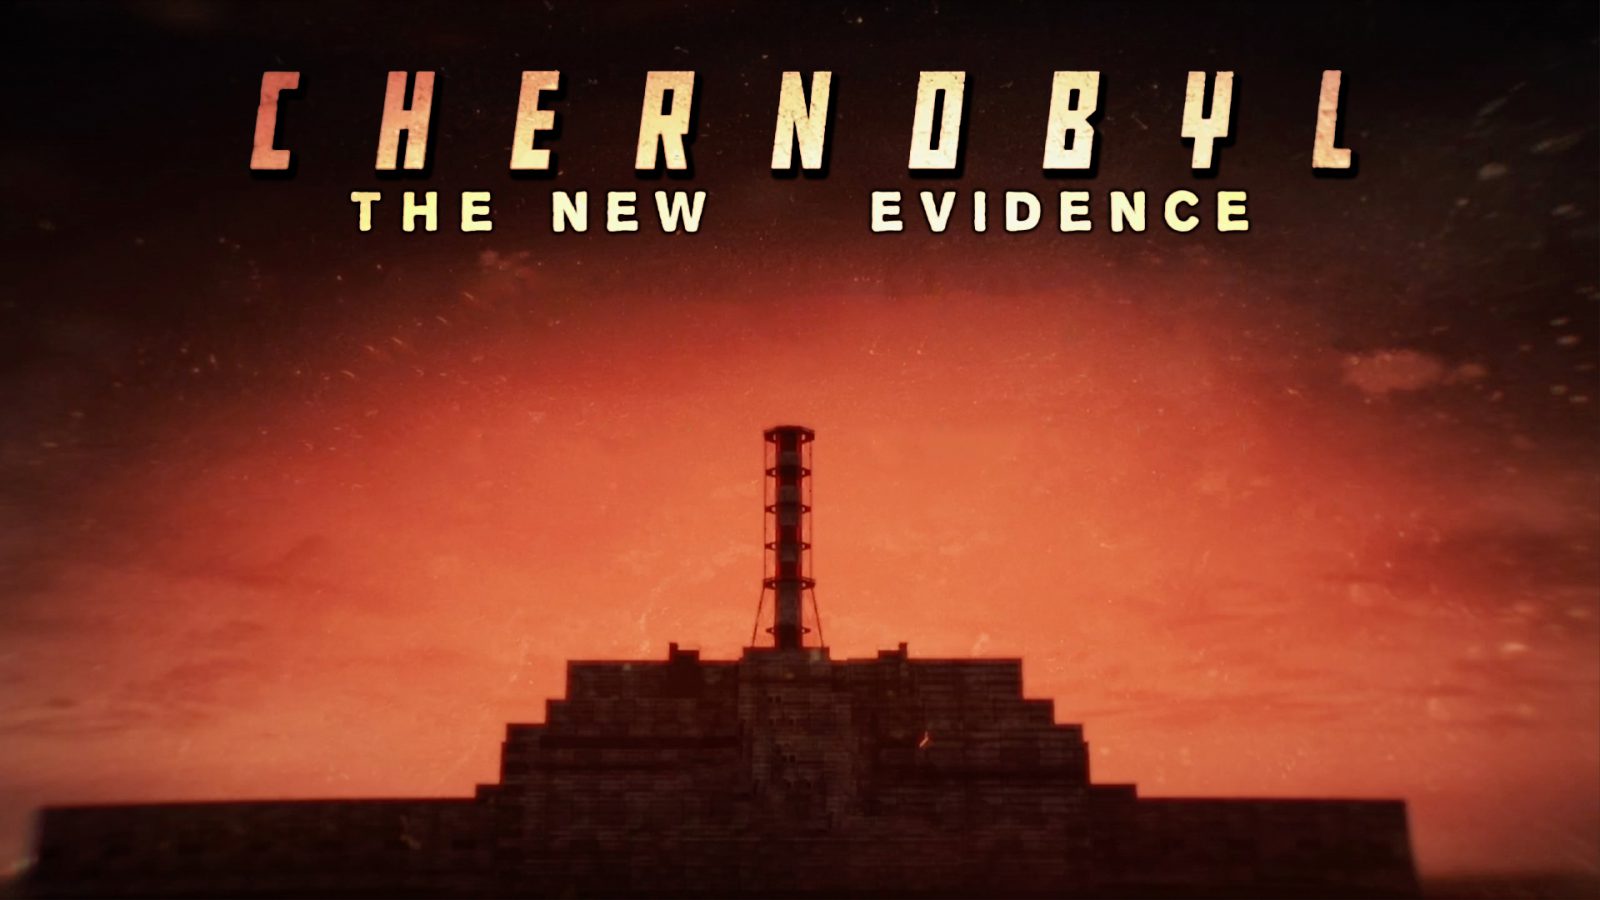 Chernobyl: The New Evidence (Blink Films for Channel 4)